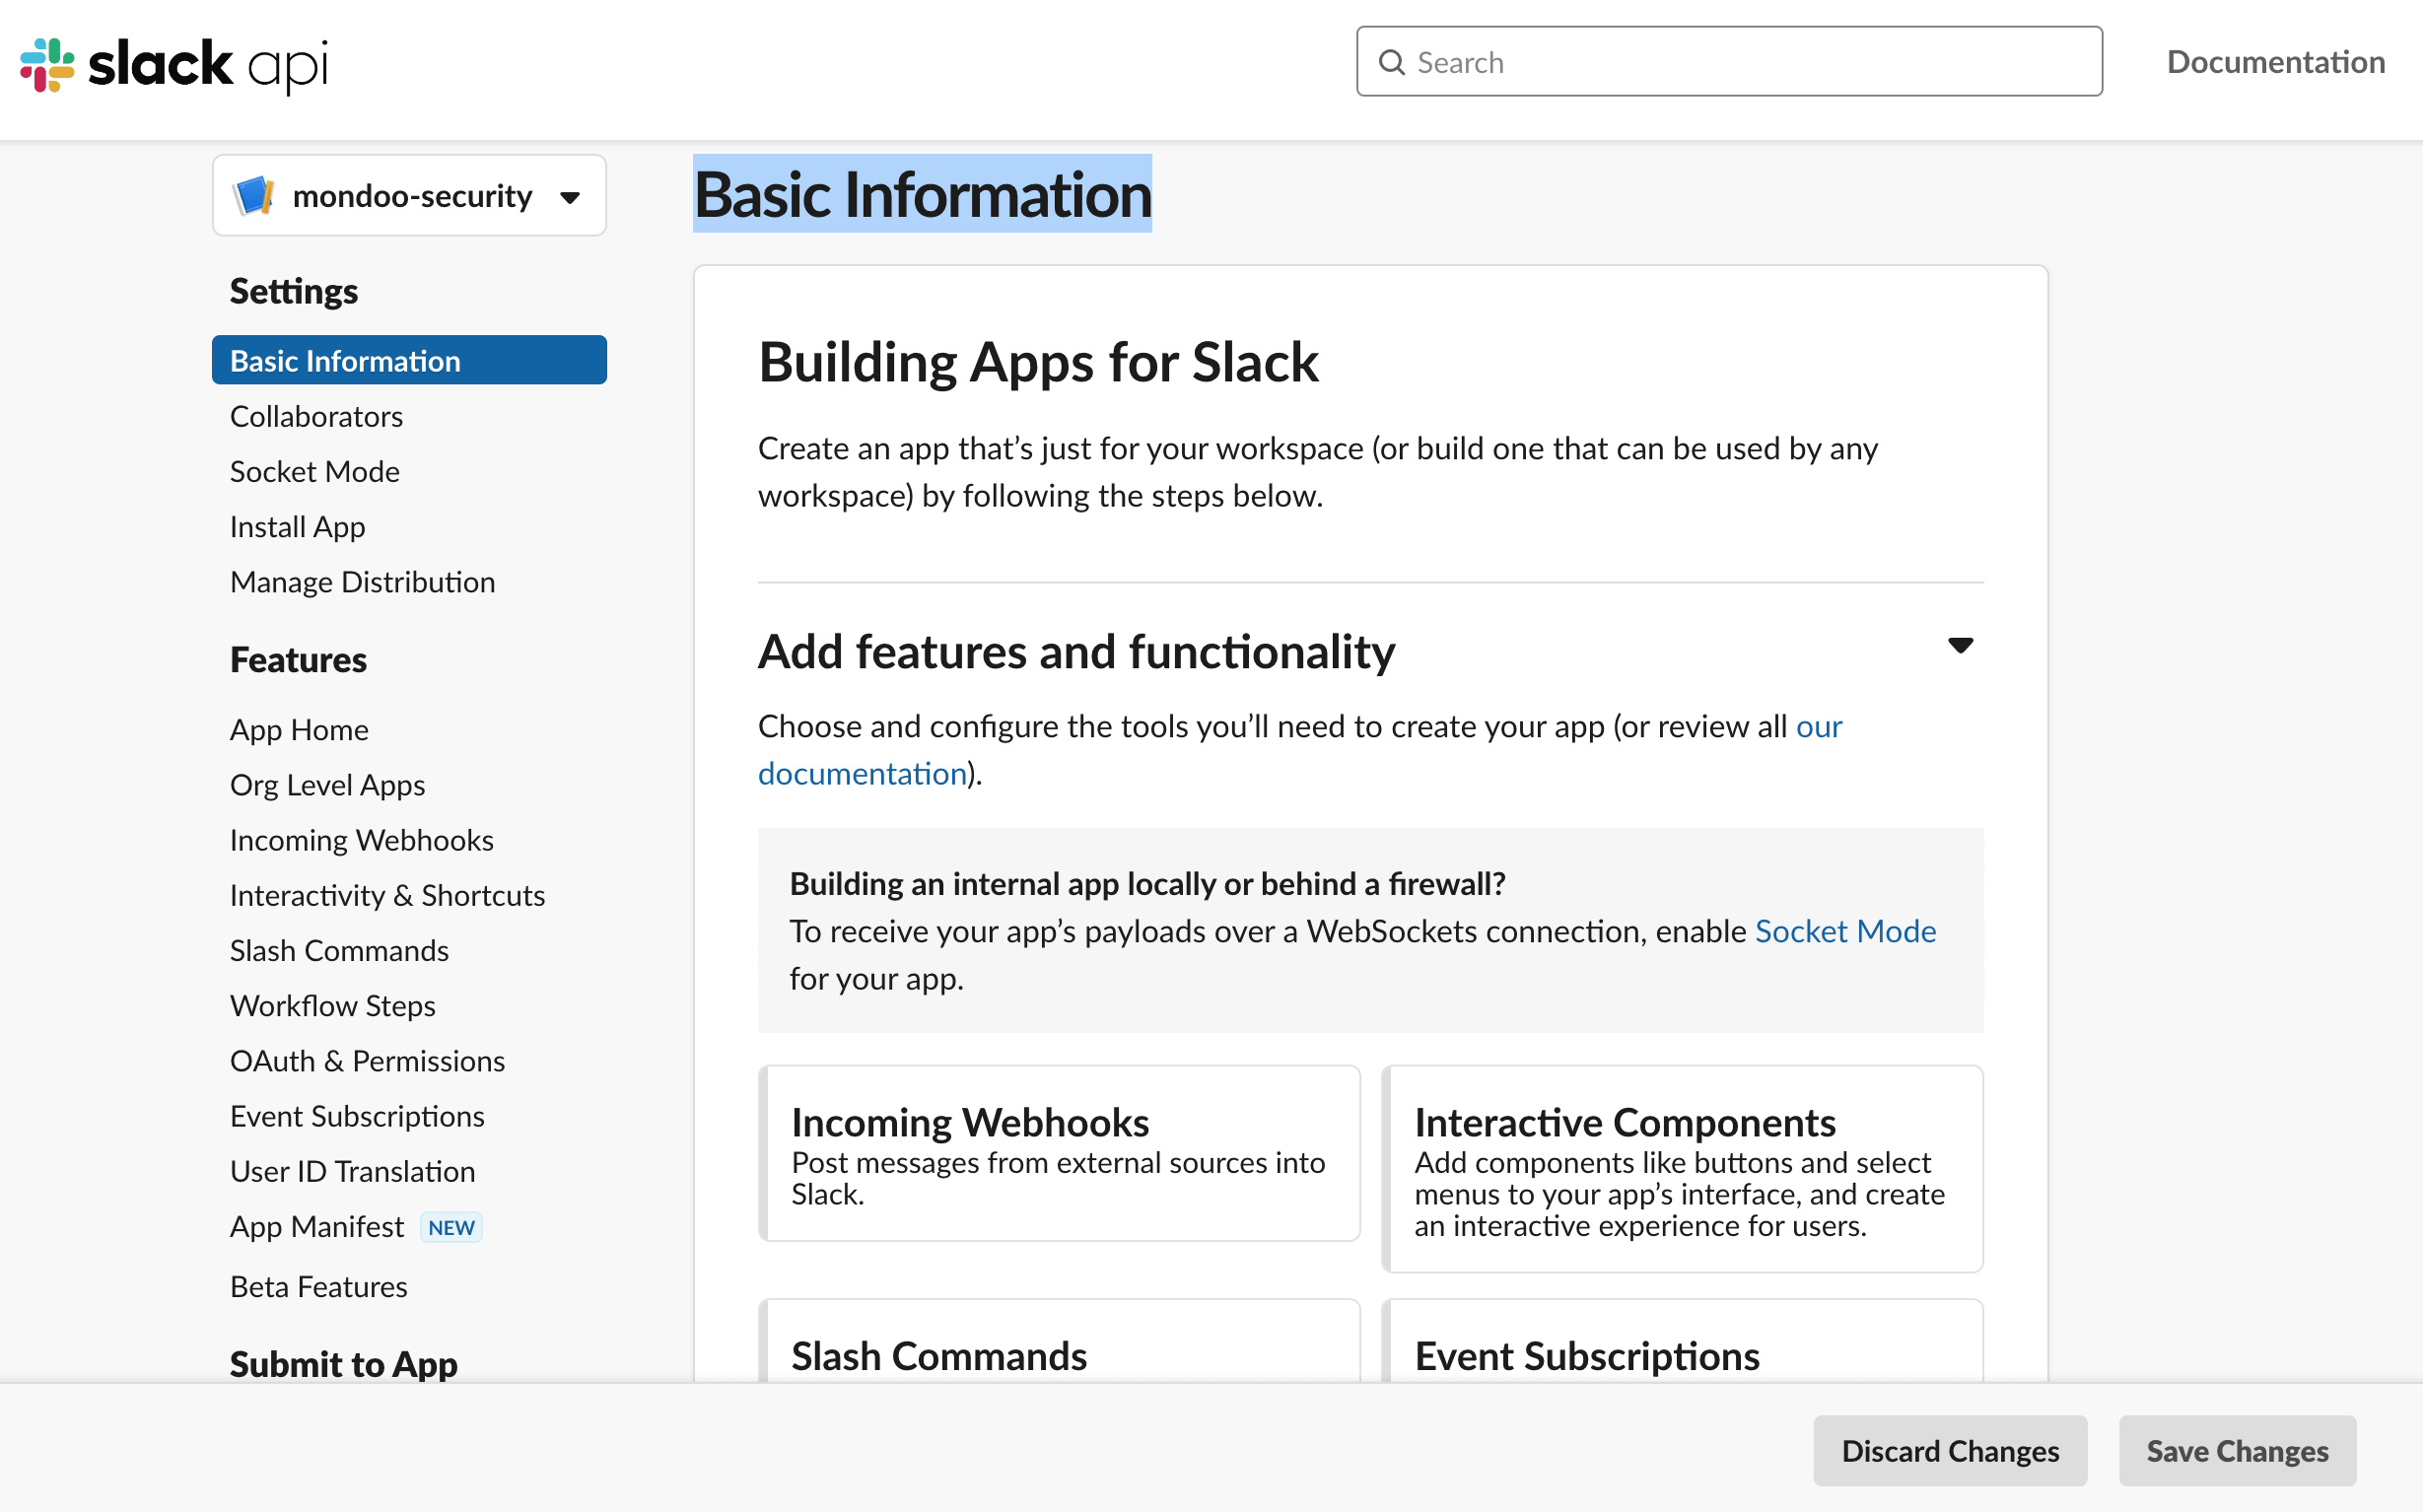 Slack app settings - Basic Information page